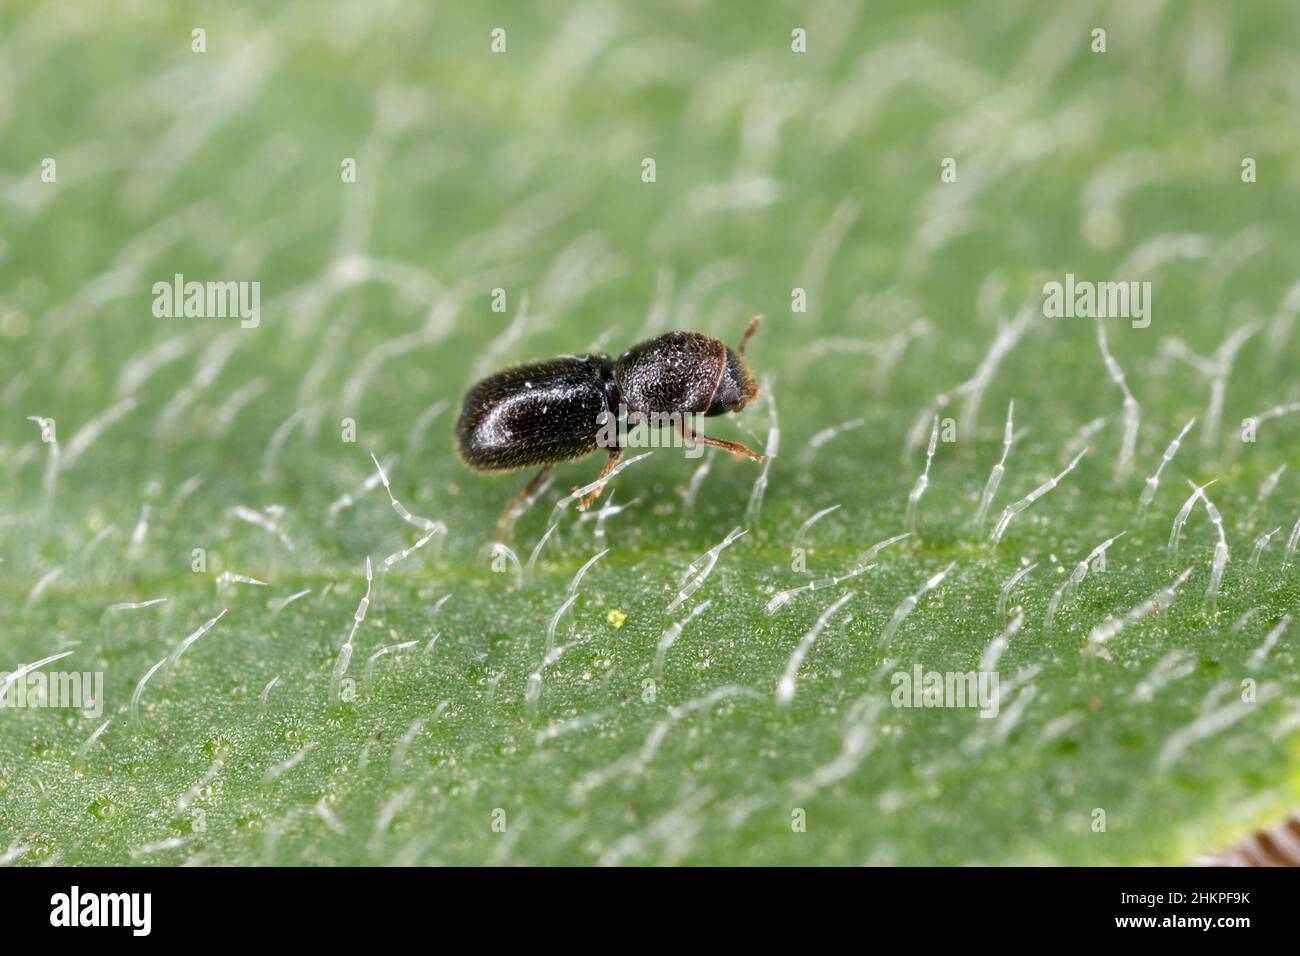 Tiny Ambrosia beetle, Xyleborus on plant leaf in high magnification. Stock Photo